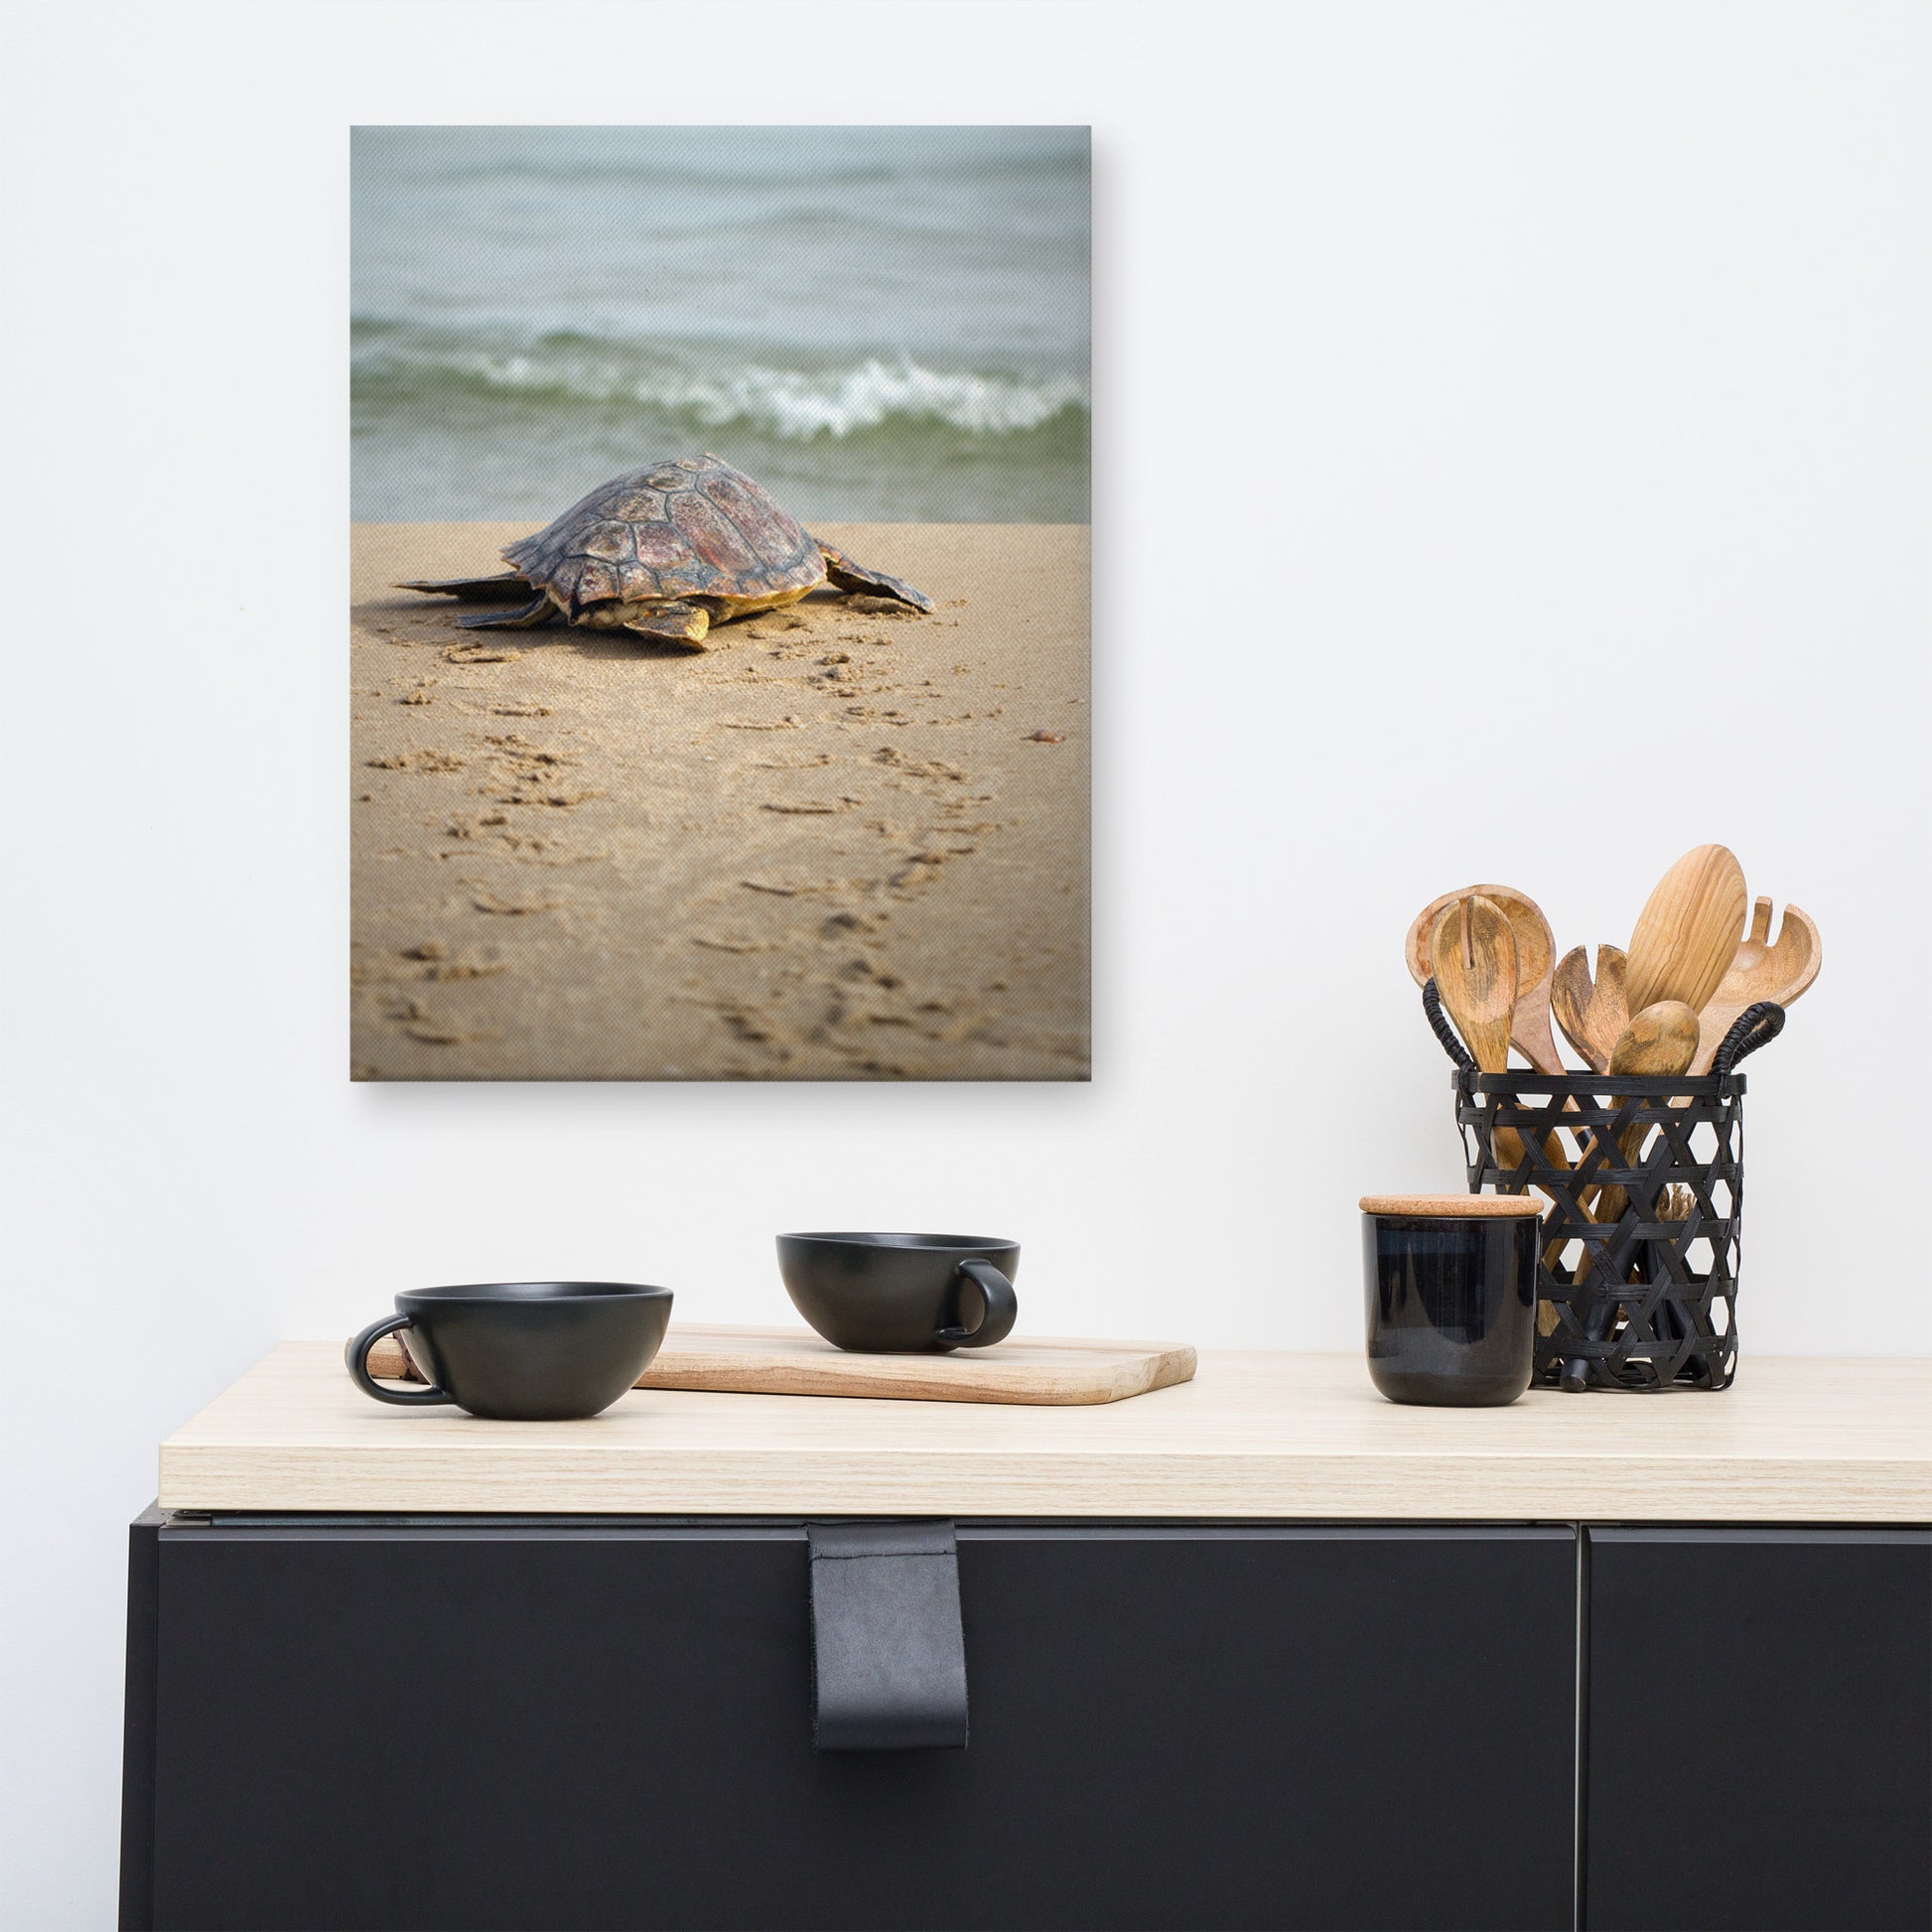 Beach Kitchen Wall Art: Baby Loggerhead Sea Turtle Hatchling at the Shore - Coastal / Wildlife / Marine Animal / Nature Photograph Canvas Wall Art Print - Artwork